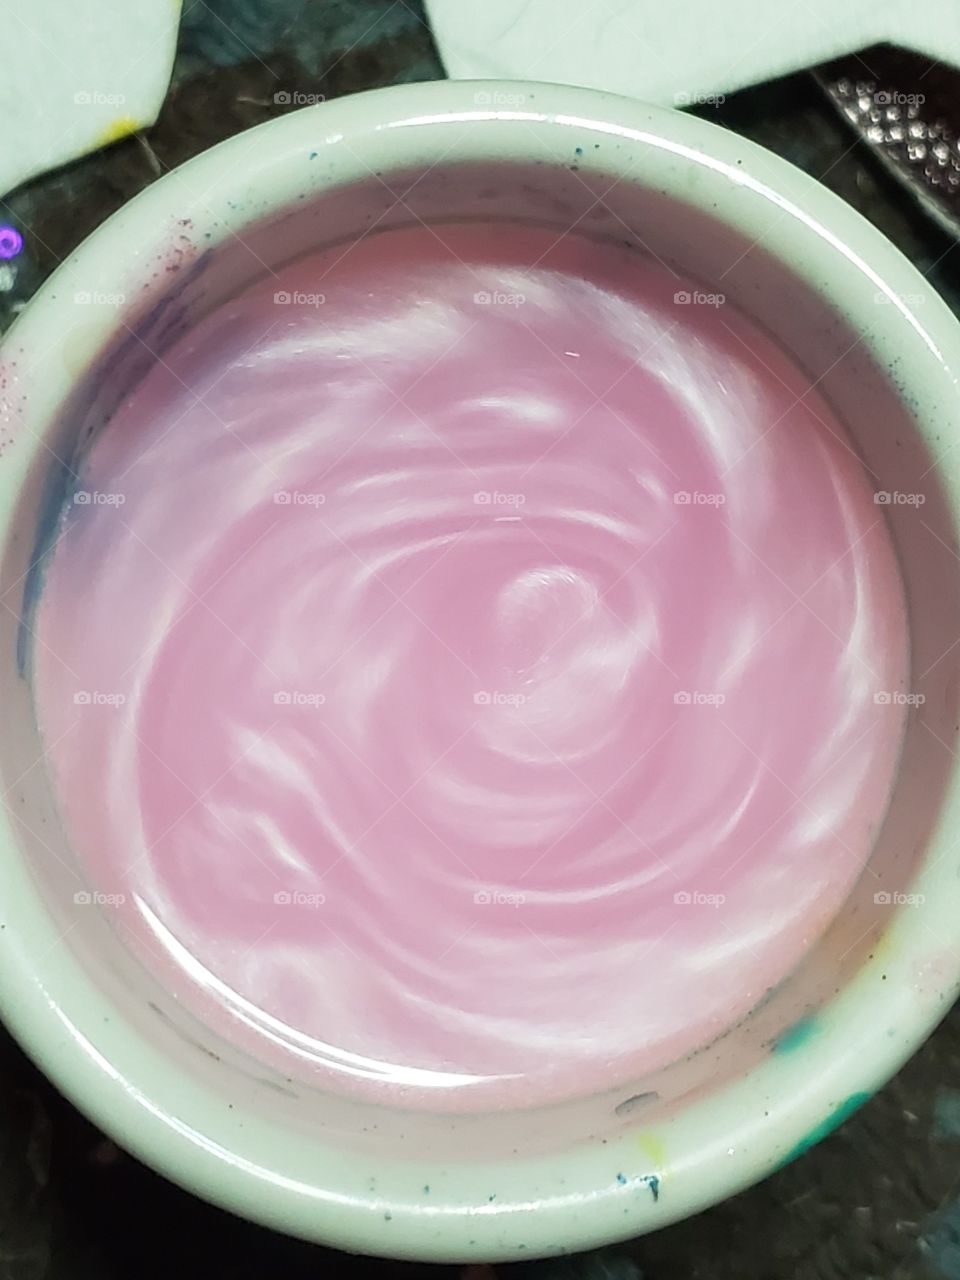 Swirling glittery liquid